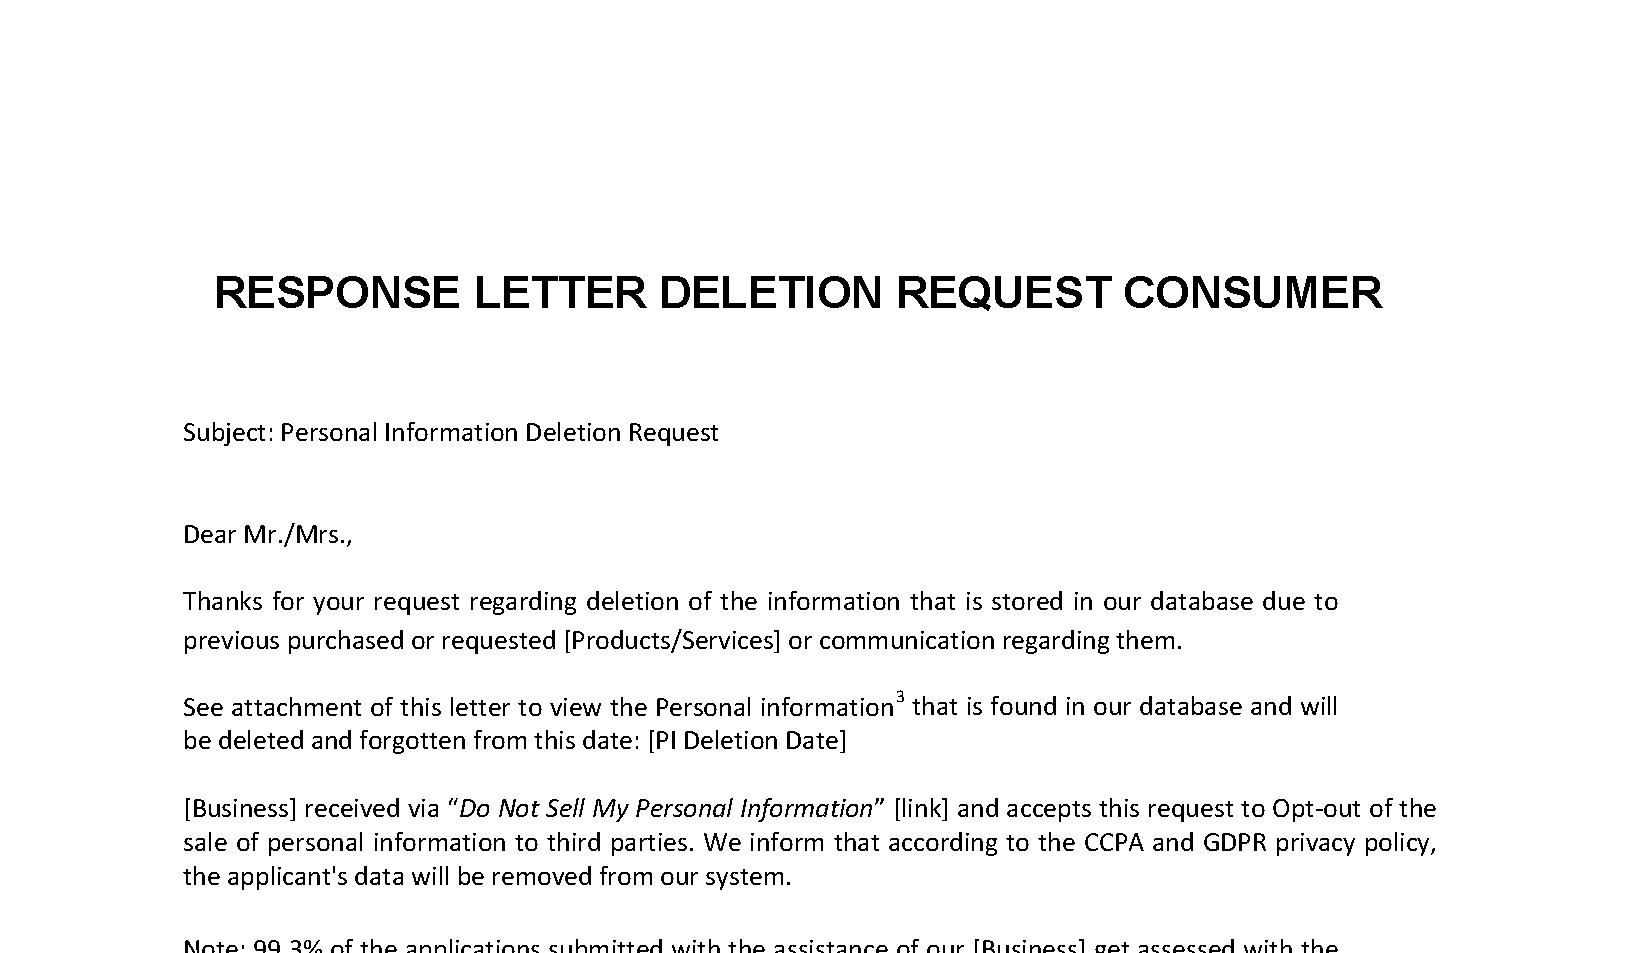 CCPA Response Letter Deletion Request main image